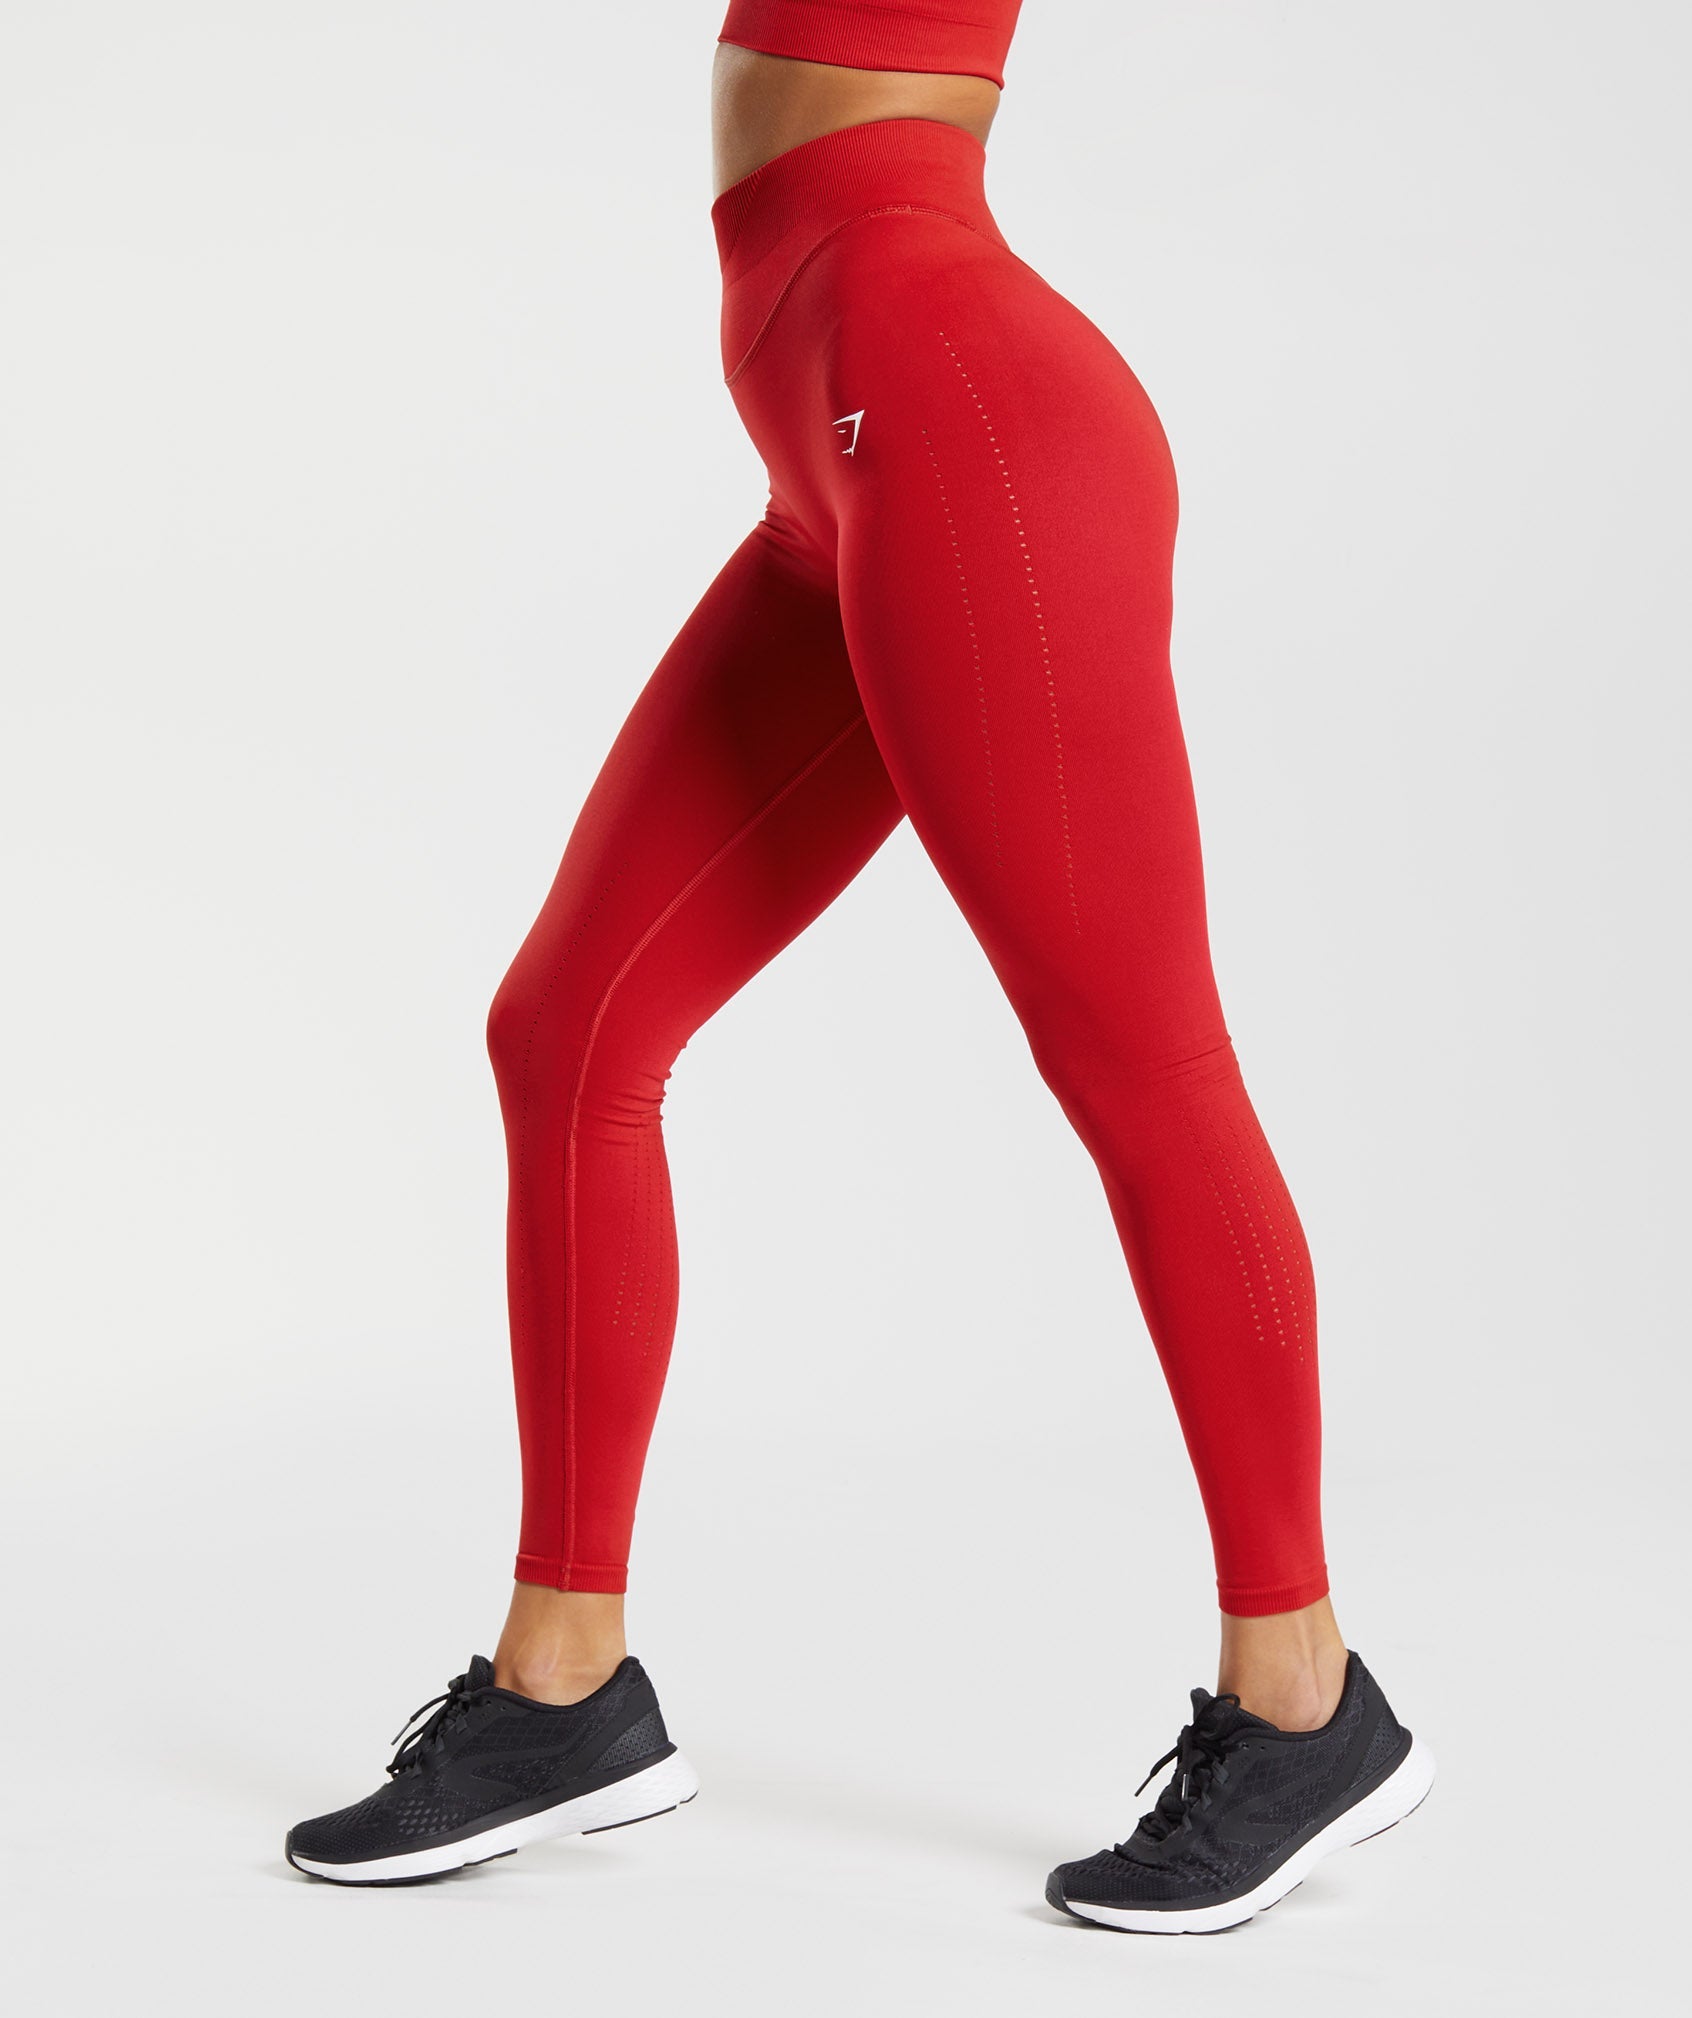 Gymshark maroon flex leggings Red Size L - $20 (60% Off Retail) - From  Kristen